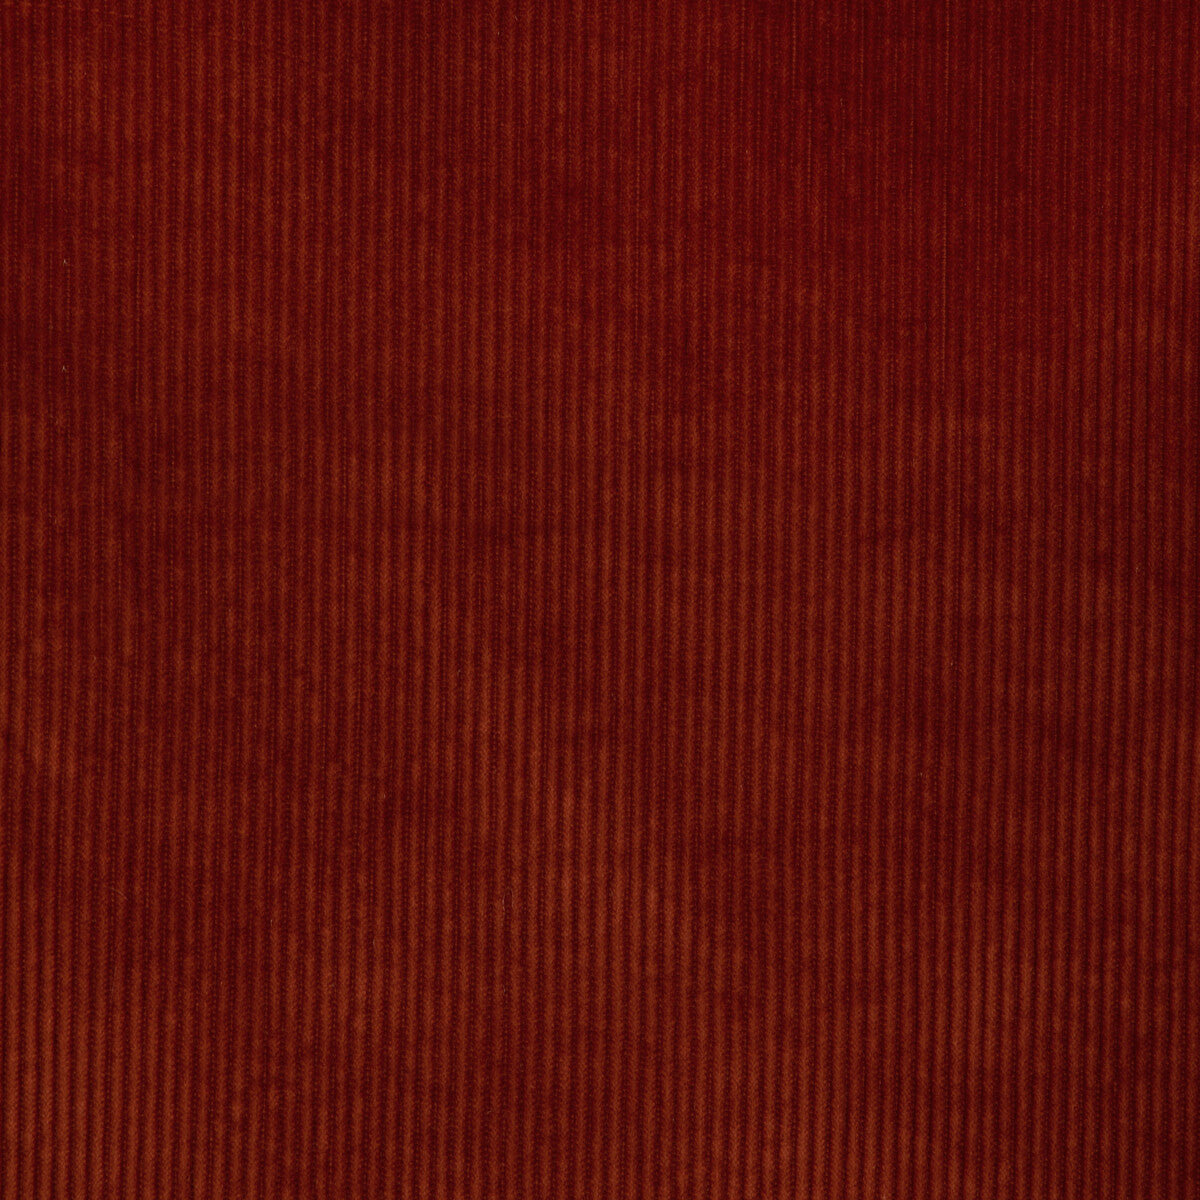 Kravet Smart fabric in 37006-912 color - pattern 37006.912.0 - by Kravet Smart